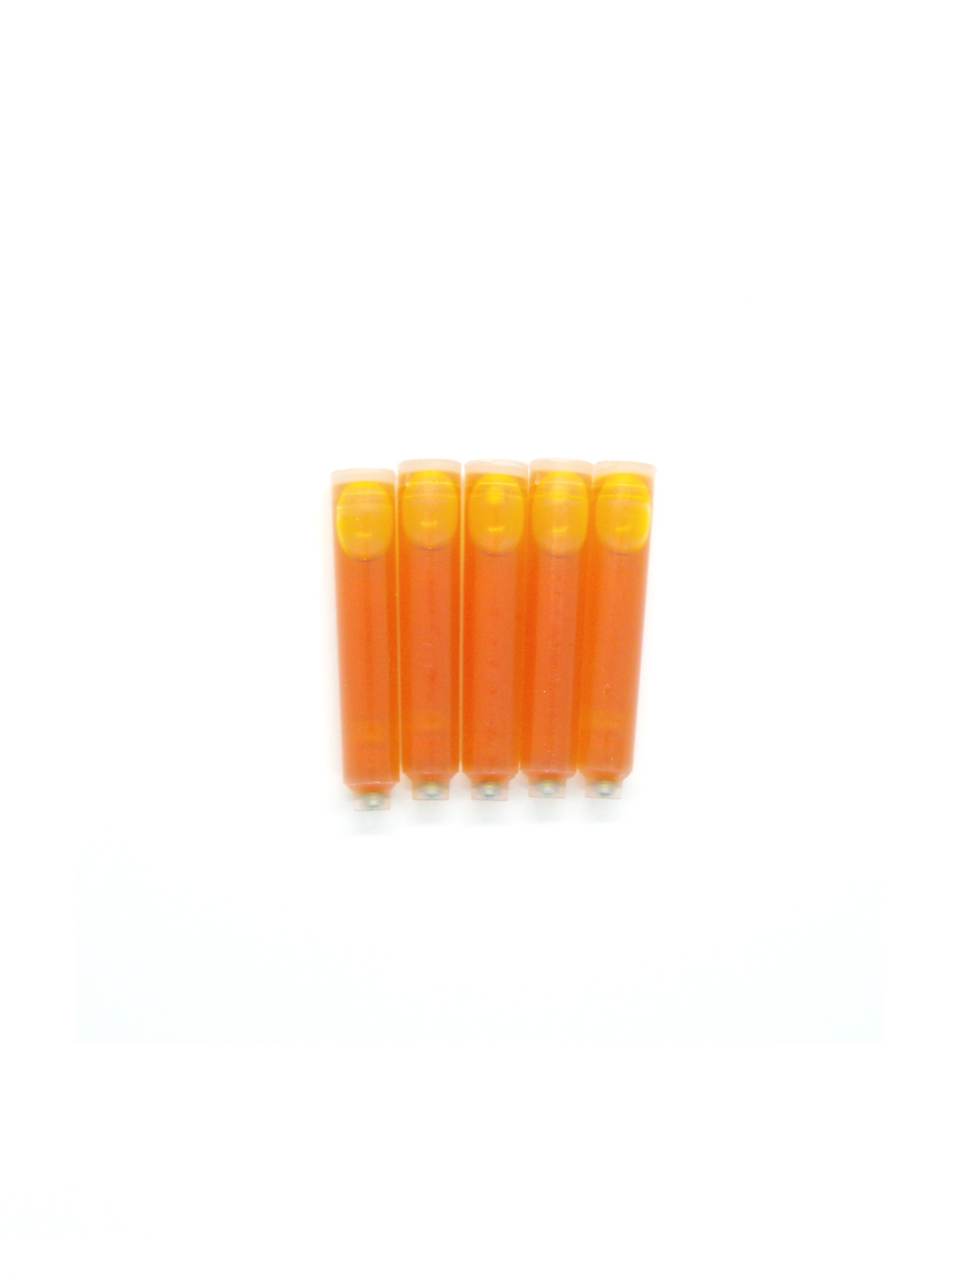 PenConverter Ink Cartridges For Standard Fountain Pens (Yellow)